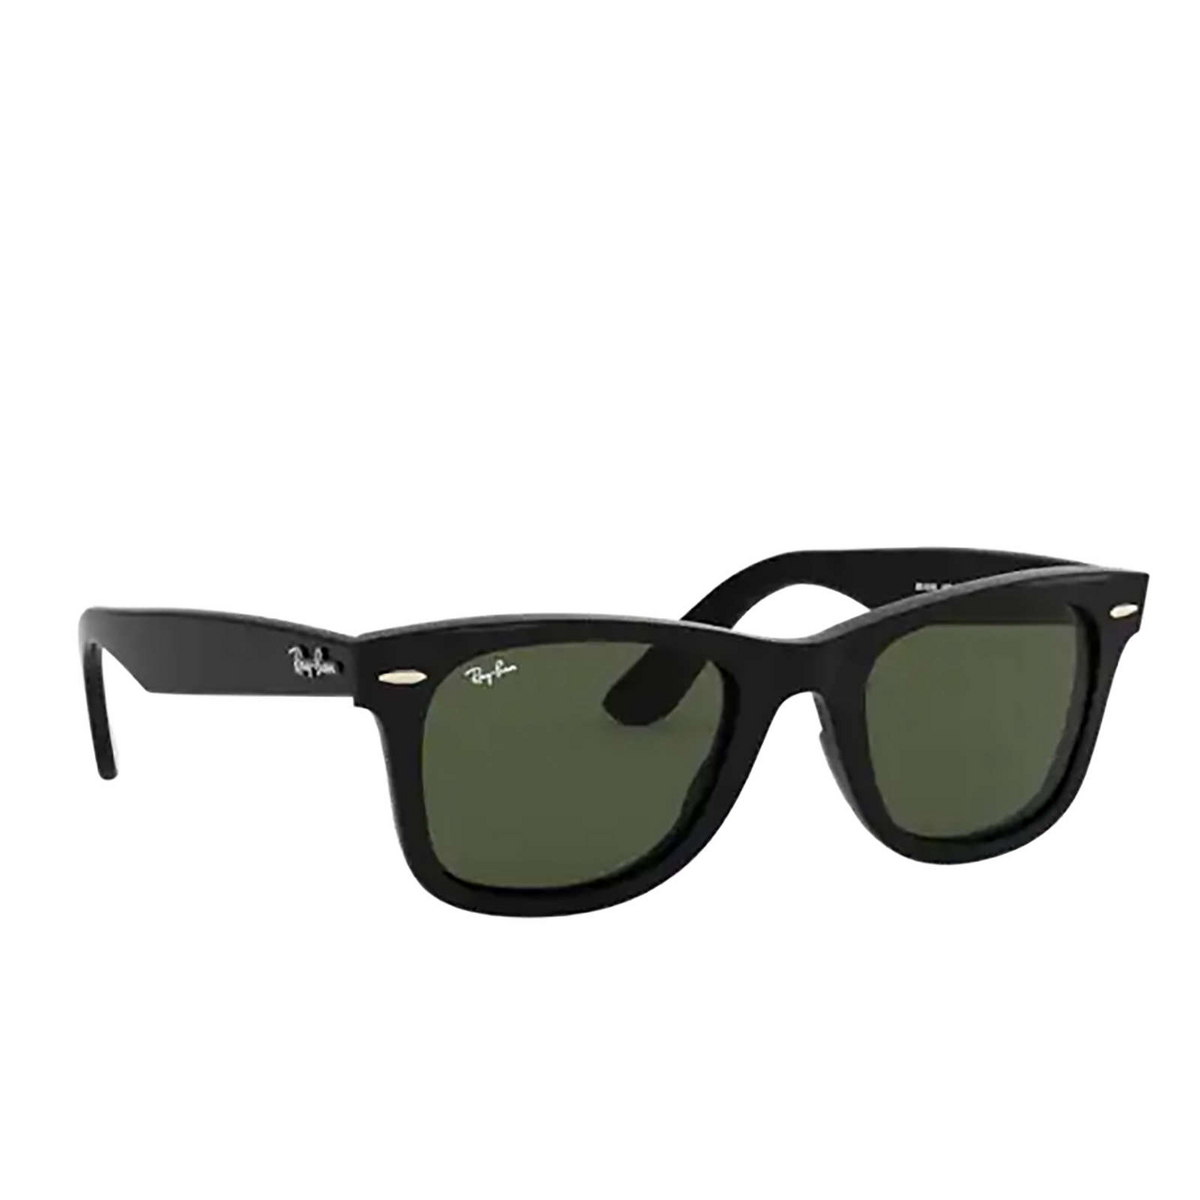 Ray-Ban WAYFARER Sunglasses 601 Black - three-quarters view